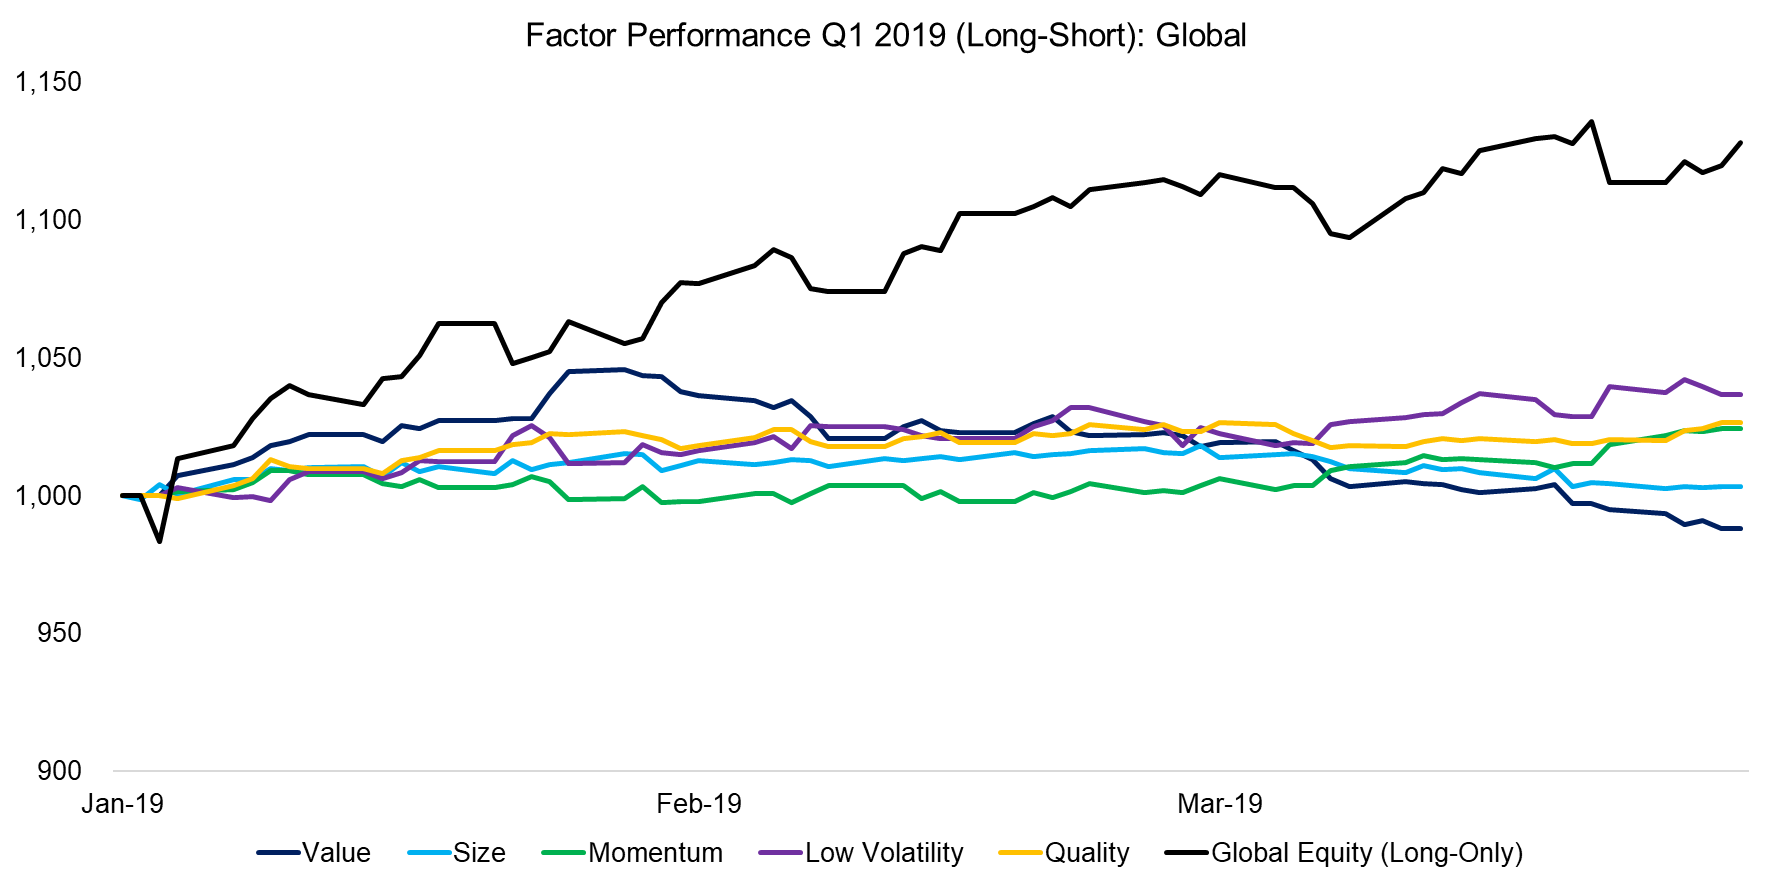 Factor Performance Q1 2019 (Long-Short) Global